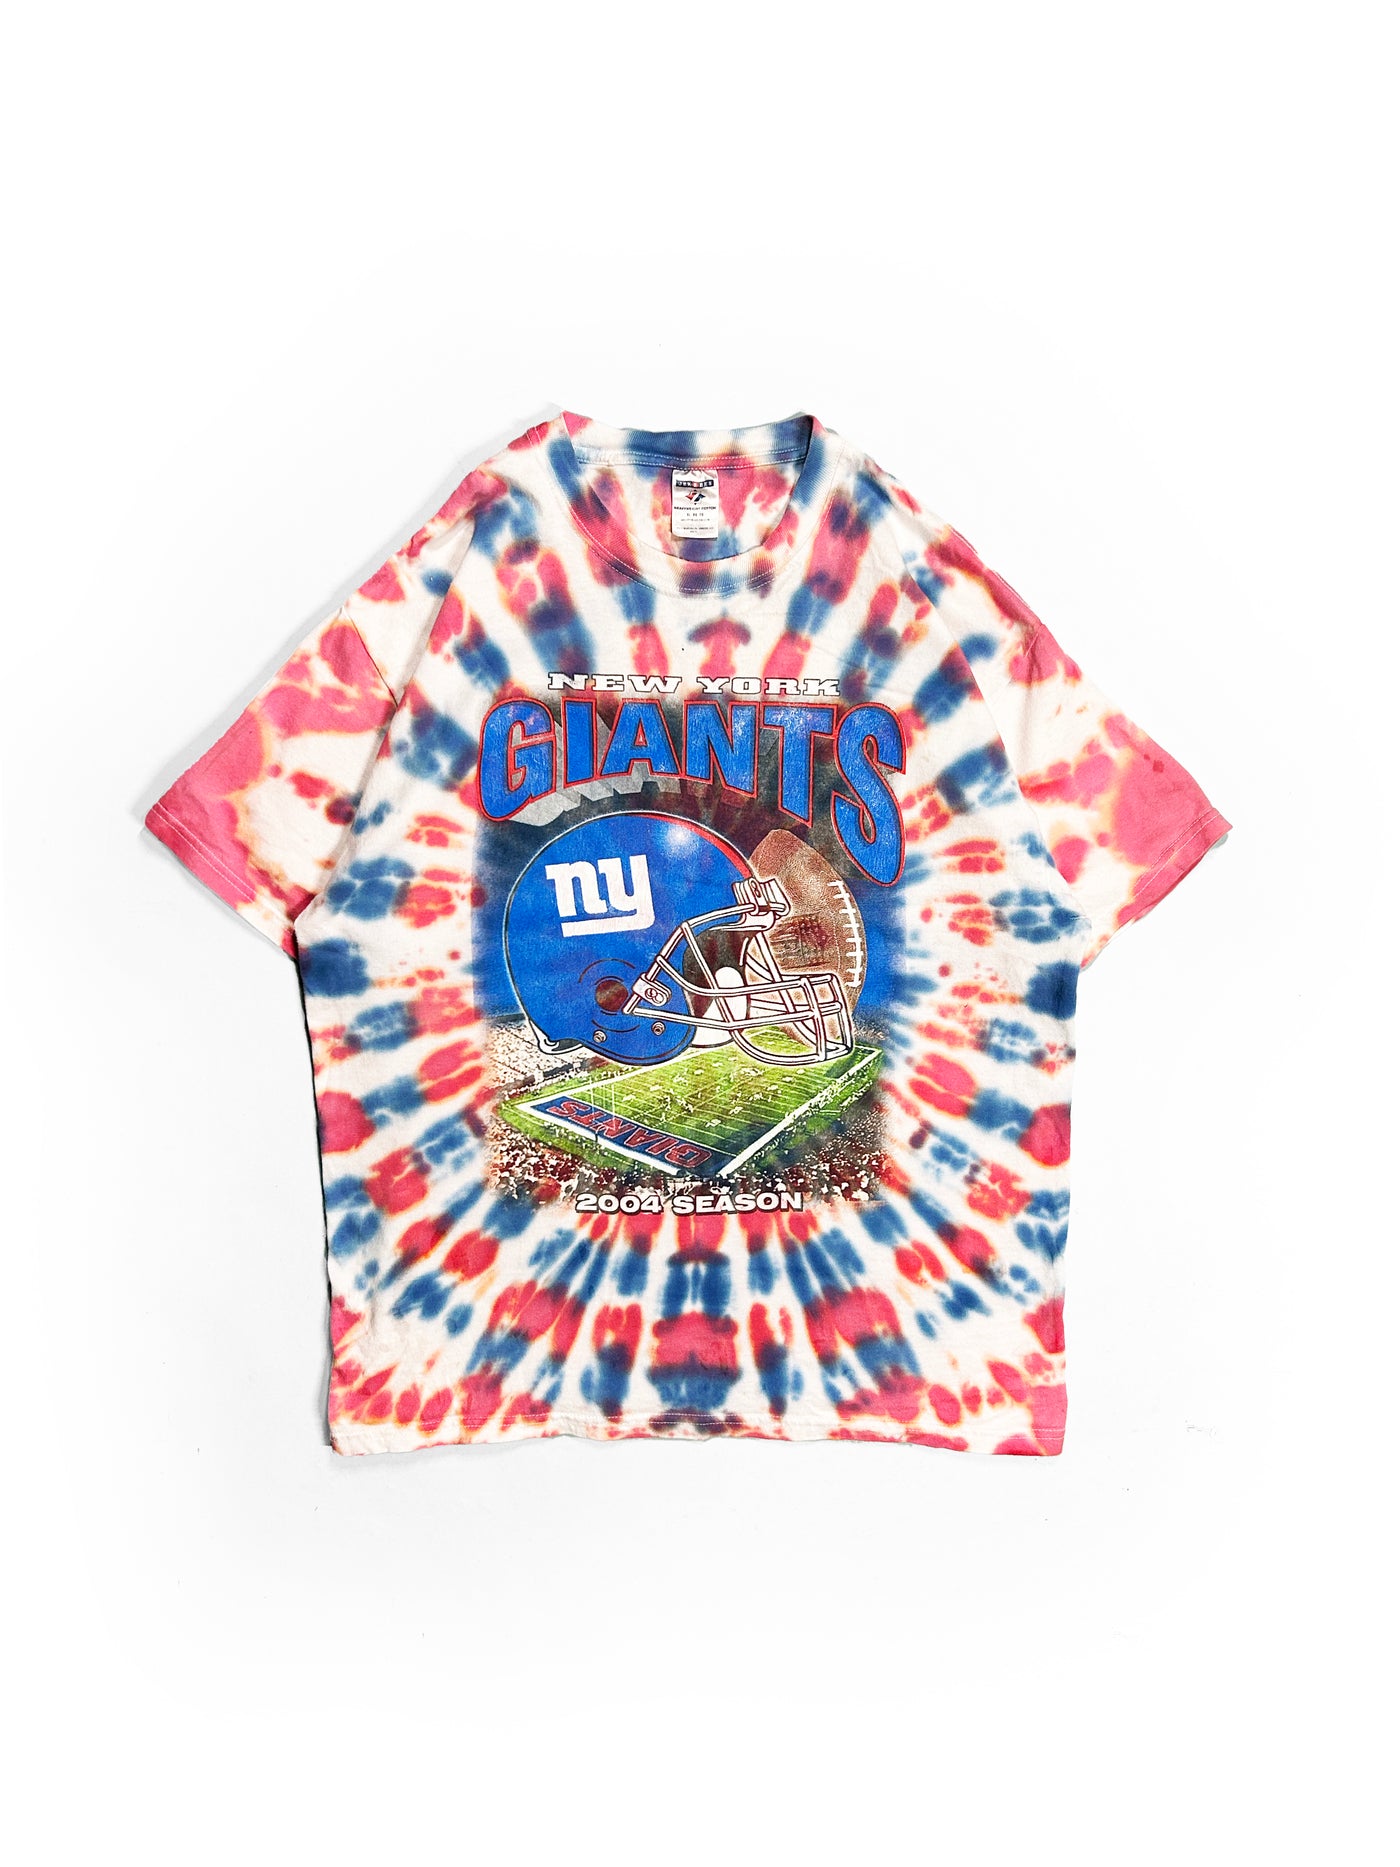 2004 New York Giants Tie Dye Shirt